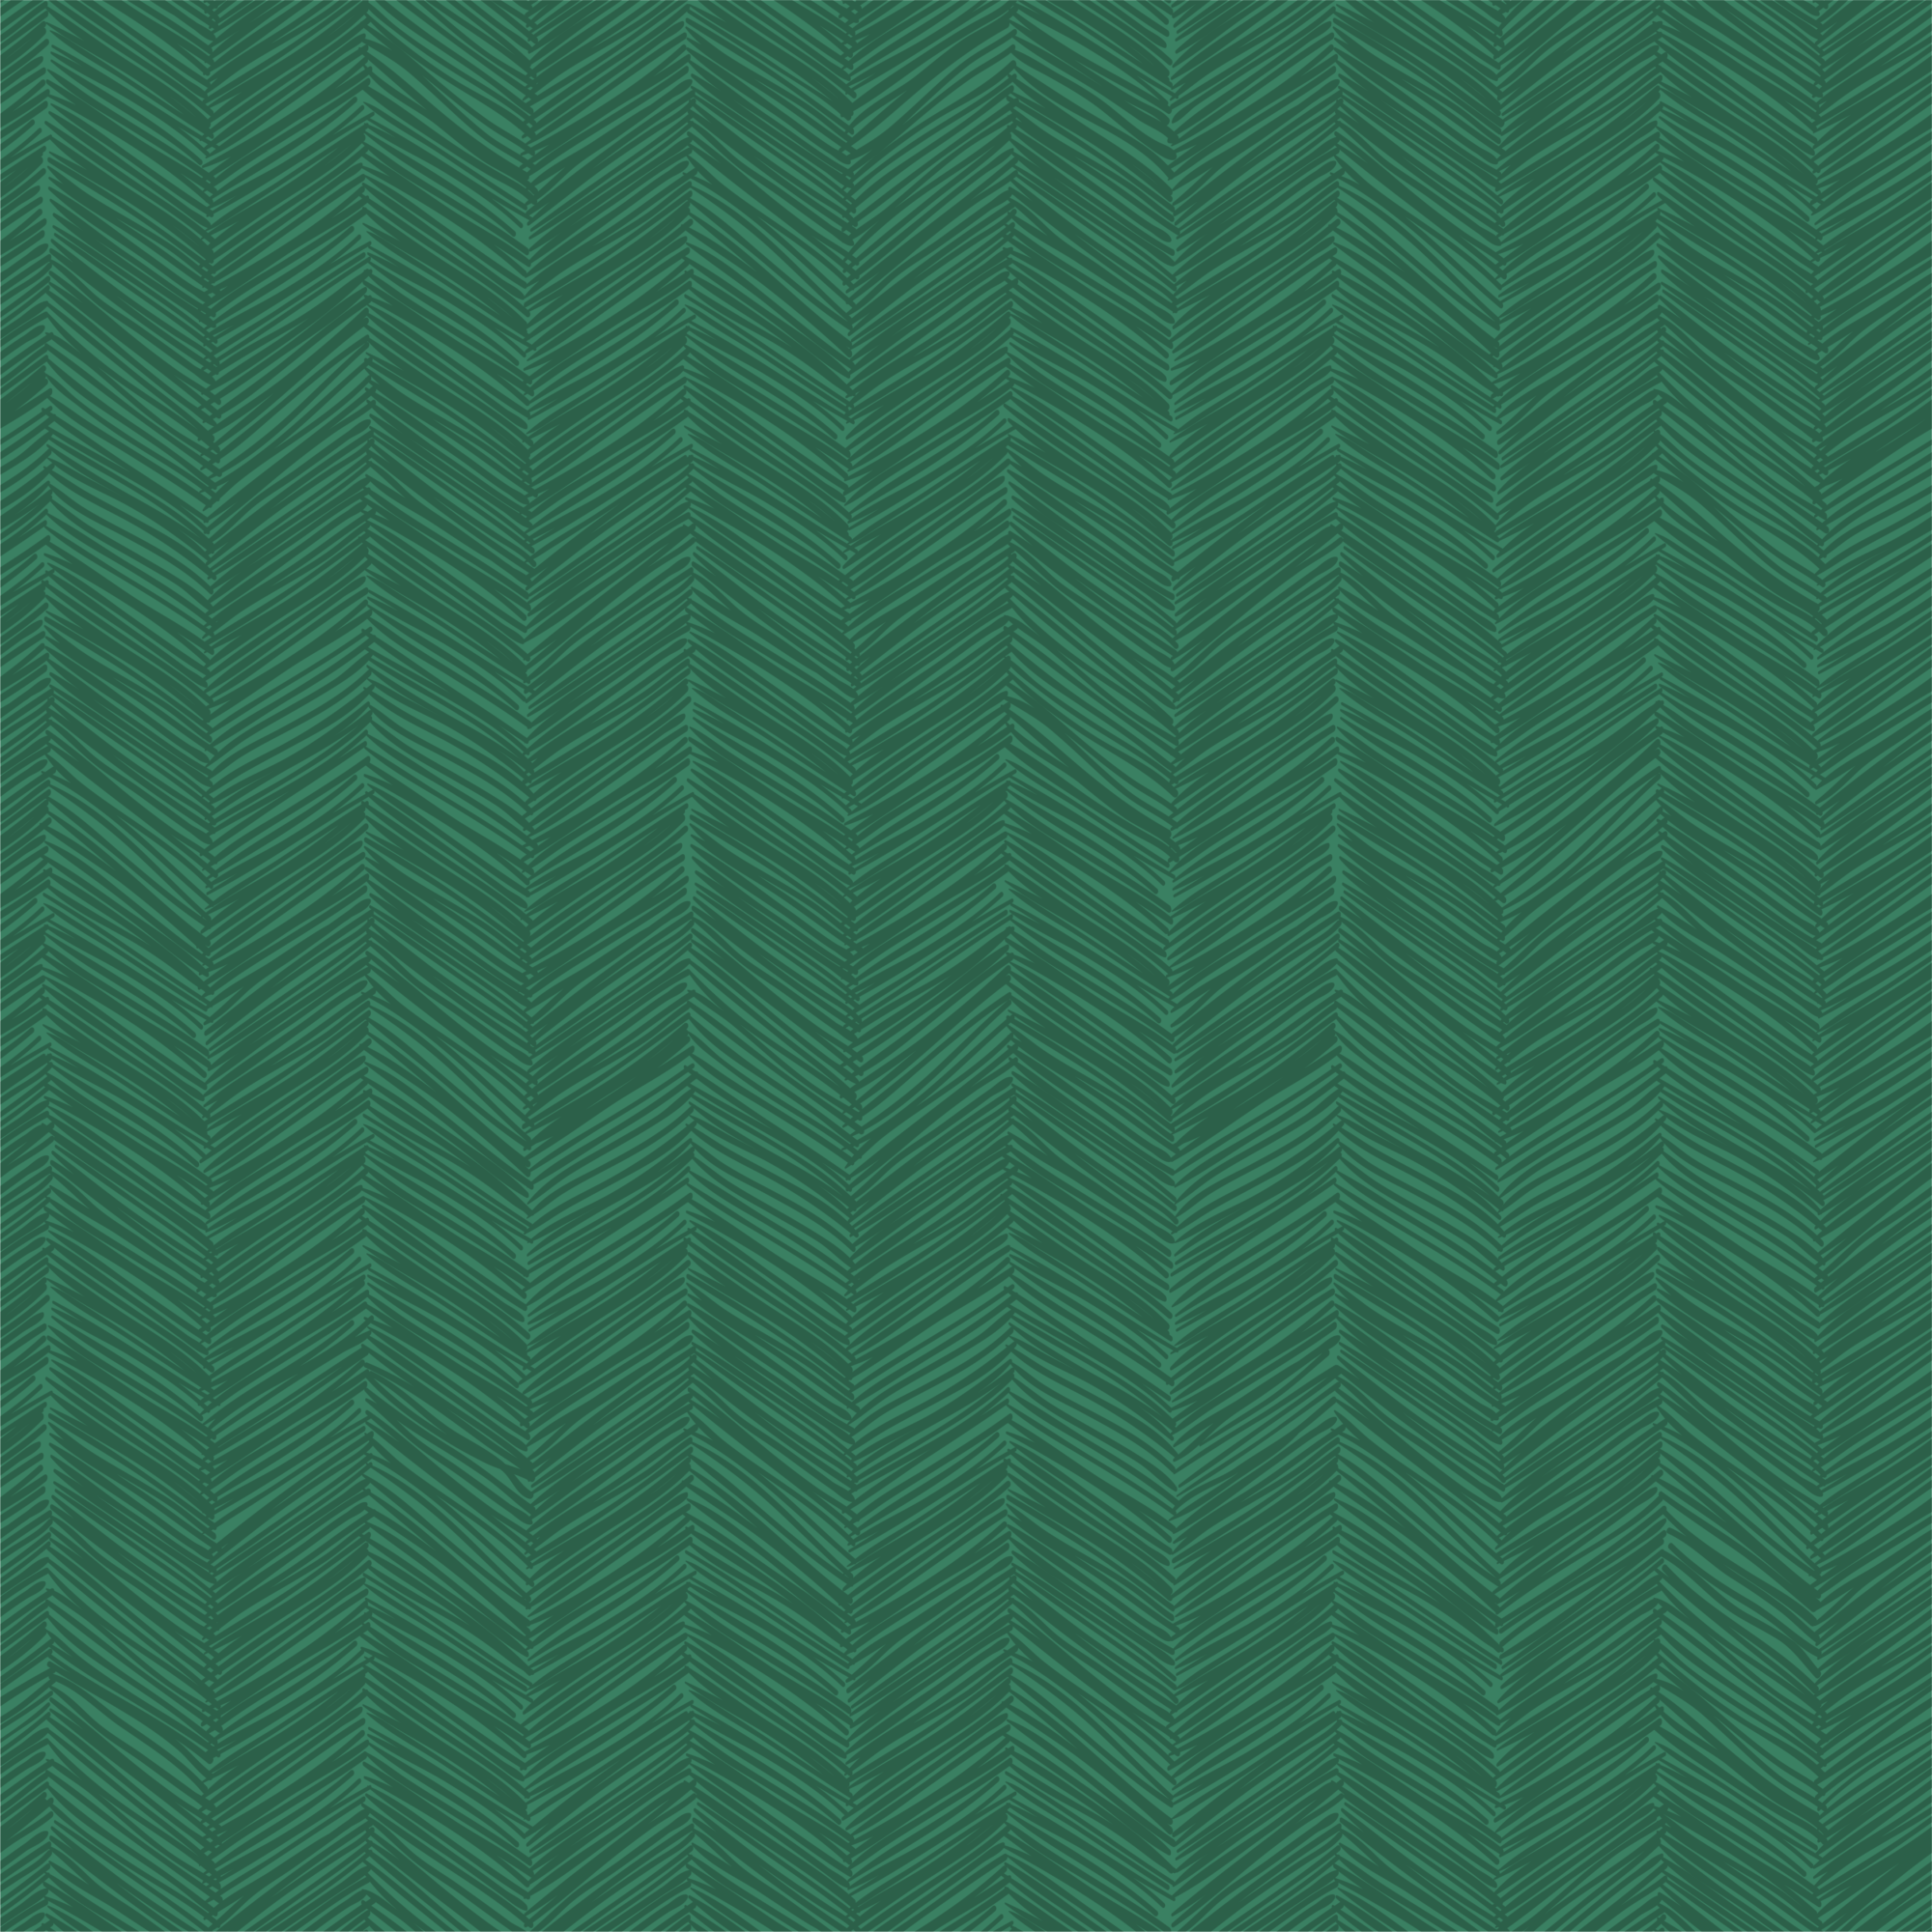 Green background with dark green crosshatching